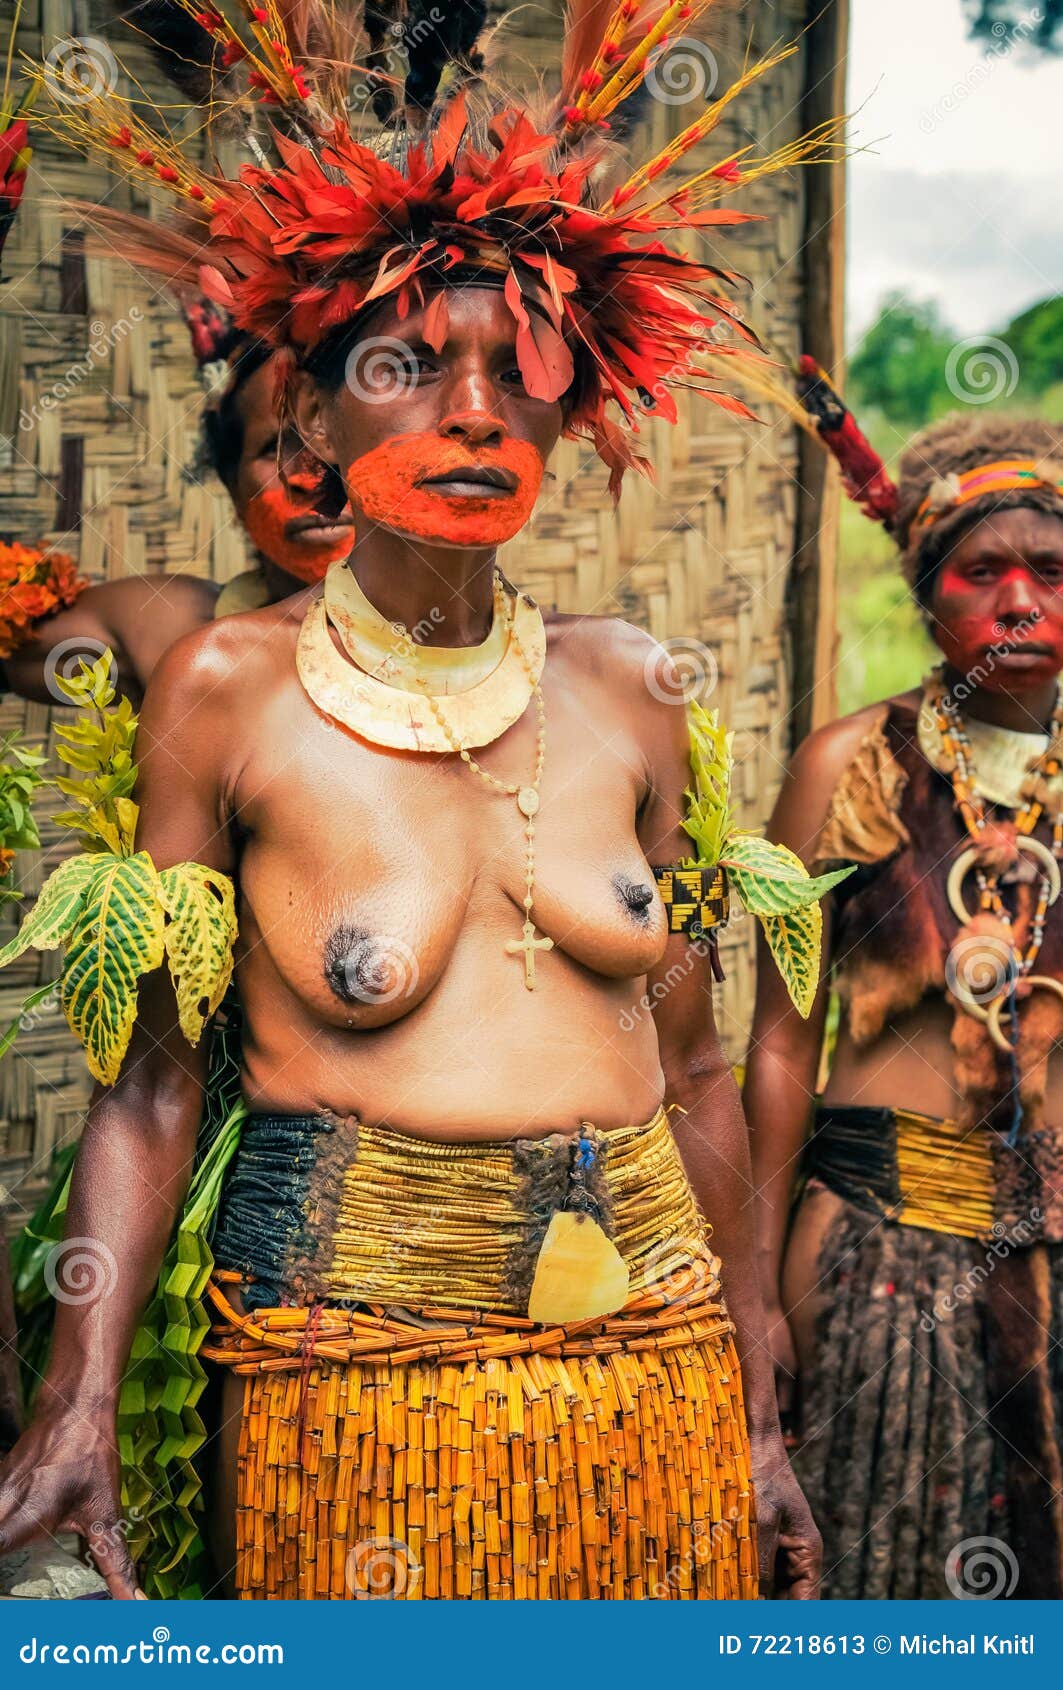 adam kingston recommends Papua New Guinea Nude